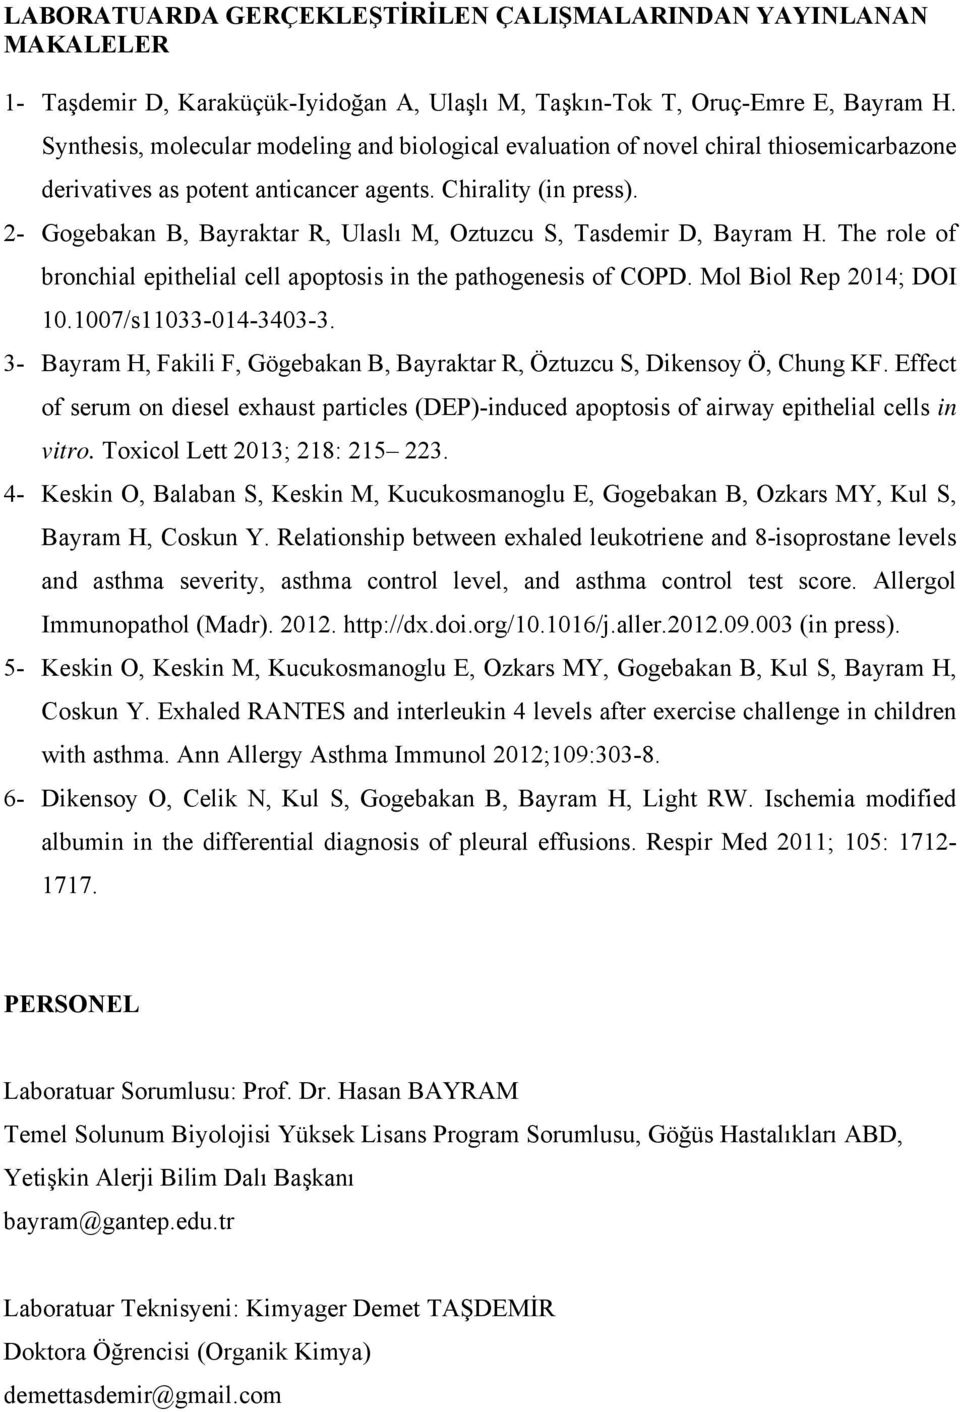 2- Gogebakan B, Bayraktar R, Ulaslı M, Oztuzcu S, Tasdemir D, Bayram H. The role of bronchial epithelial cell apoptosis in the pathogenesis of COPD. Mol Biol Rep 2014; DOI 10.1007/s11033-014-3403-3.